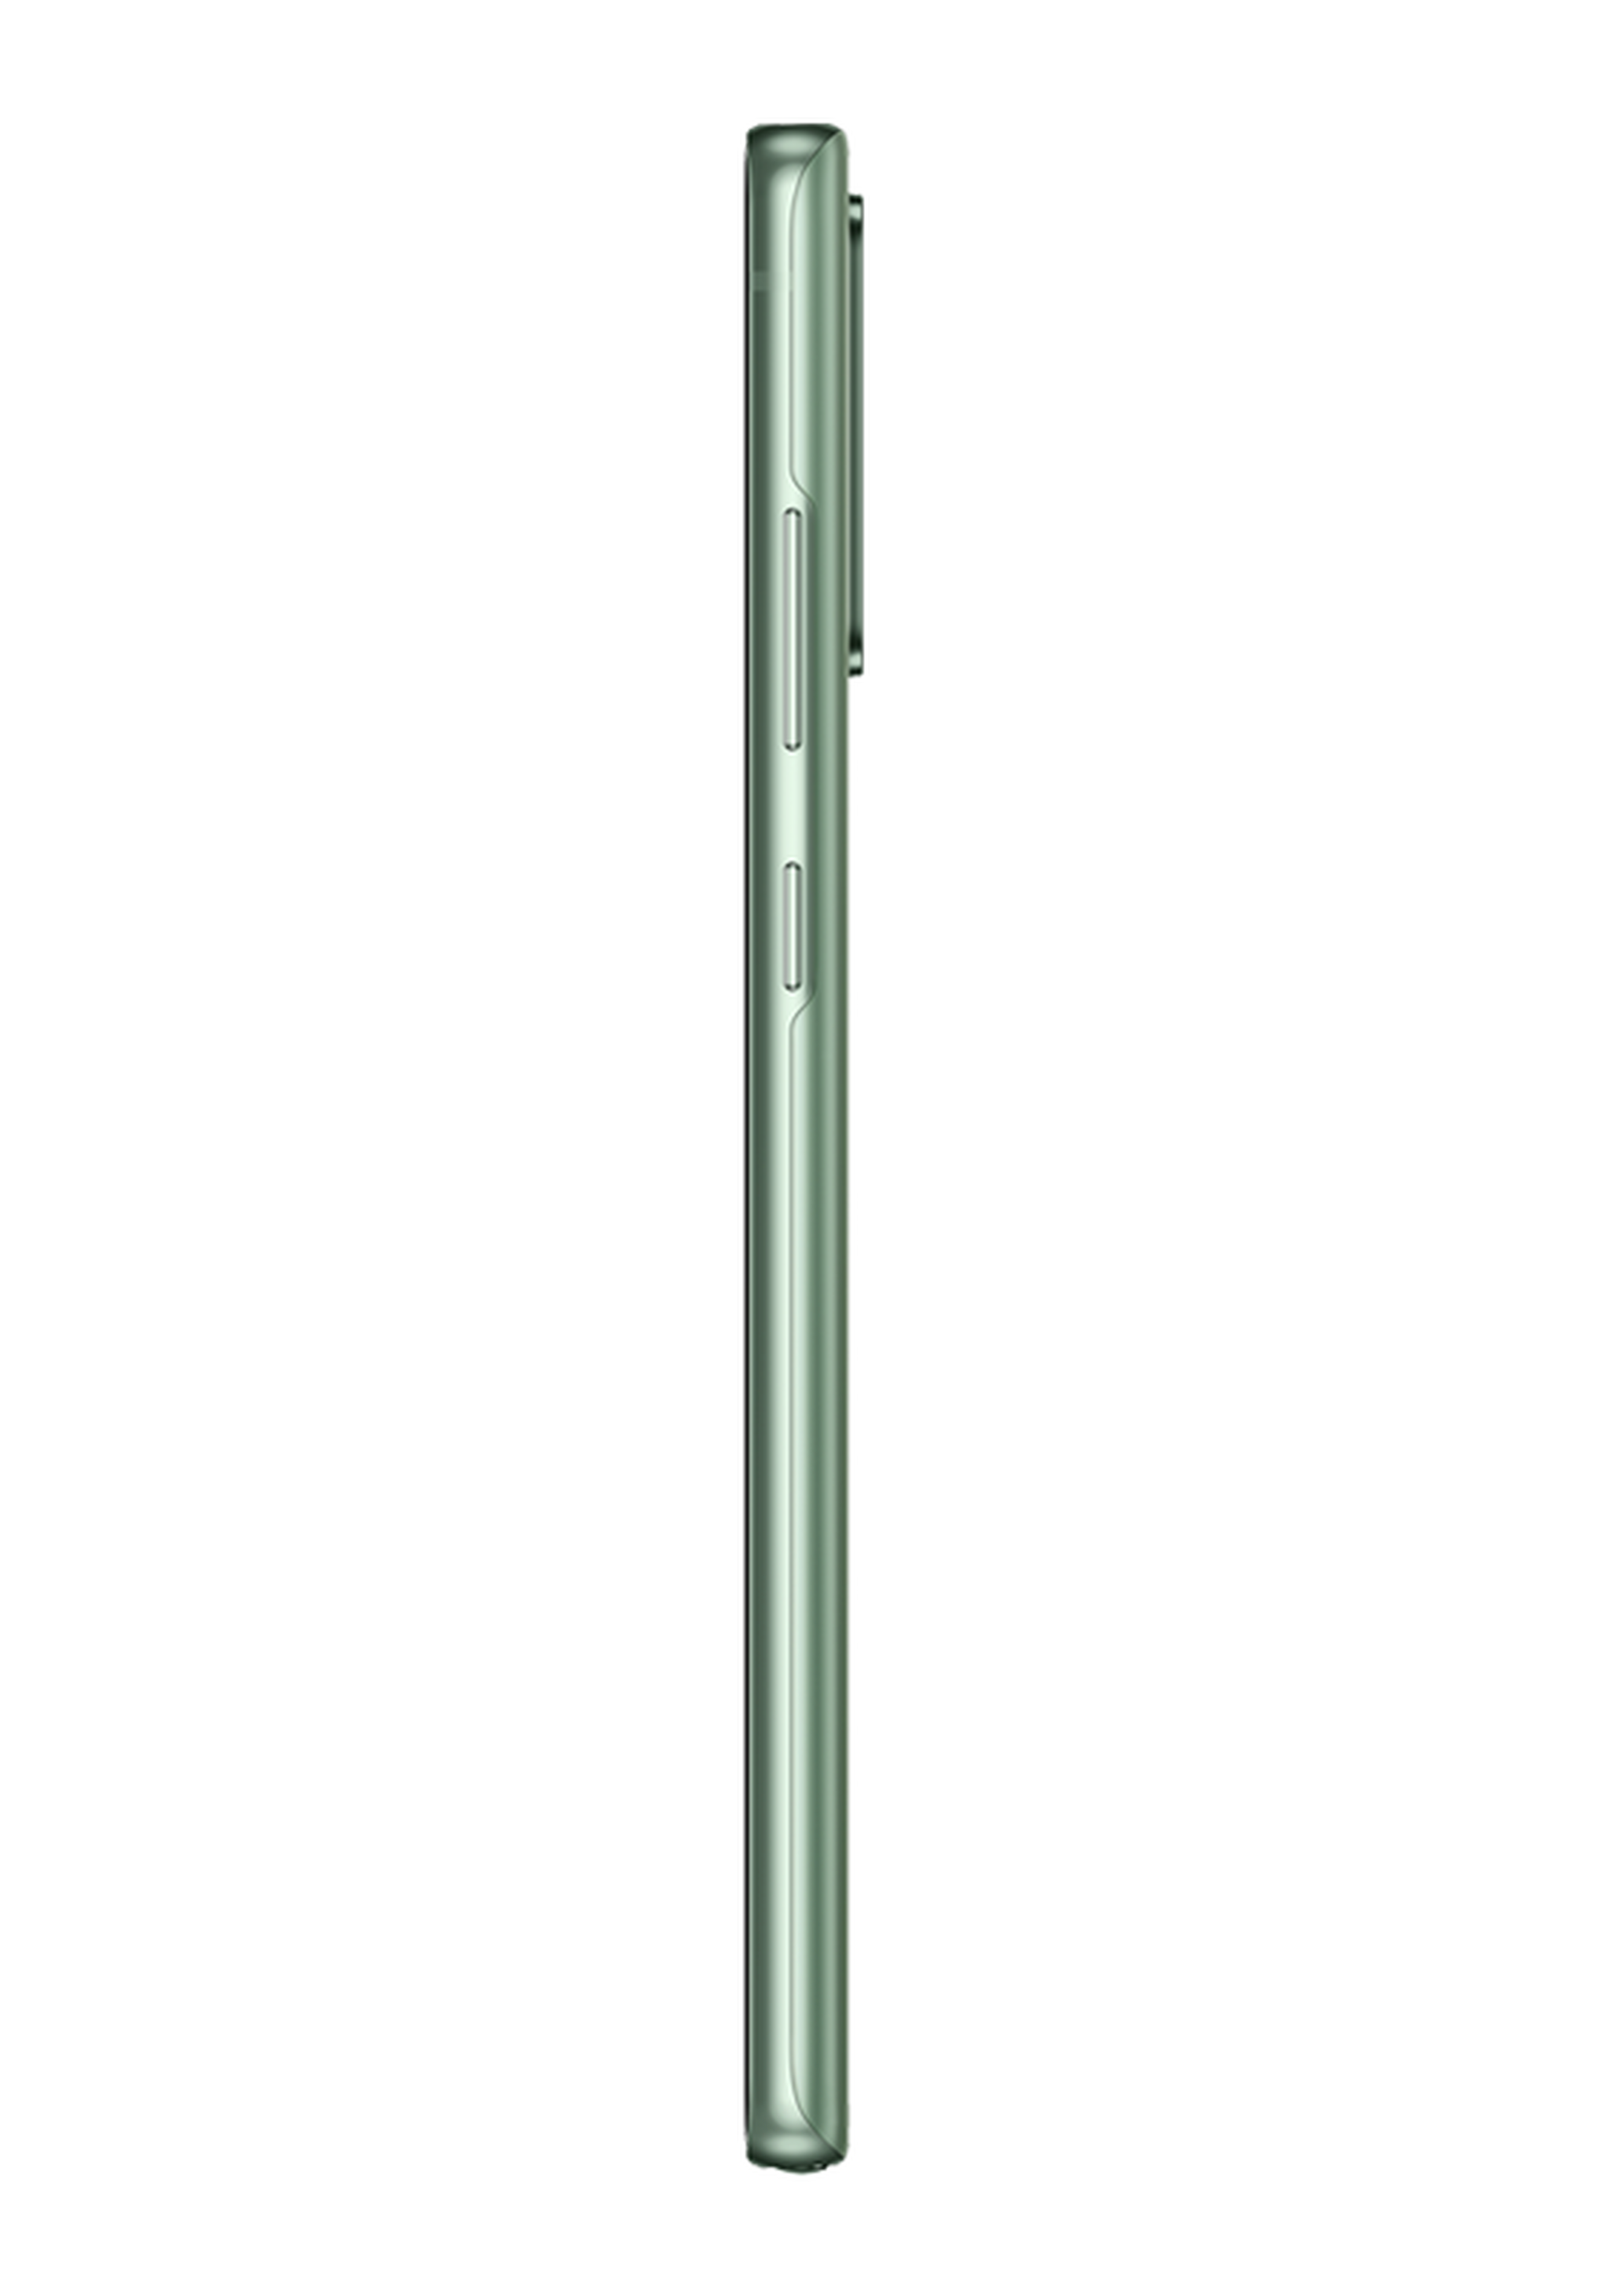 Samsung Galaxy Note 20 5G 256GB Phone –  Green